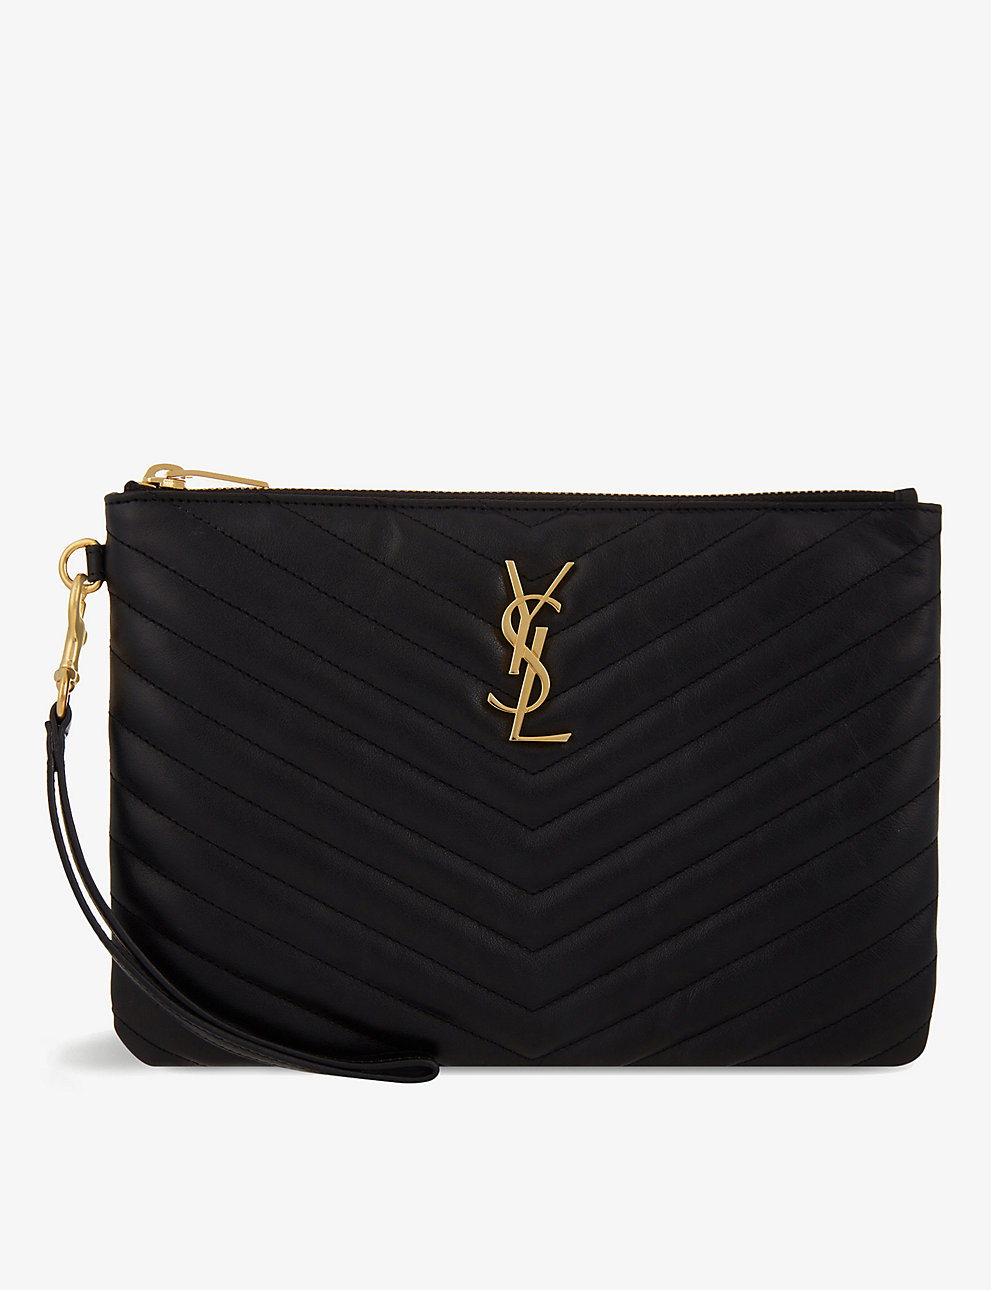 Yves Saint Laurent Handbags for sale in Lubbock, Texas | Facebook  Marketplace | Facebook